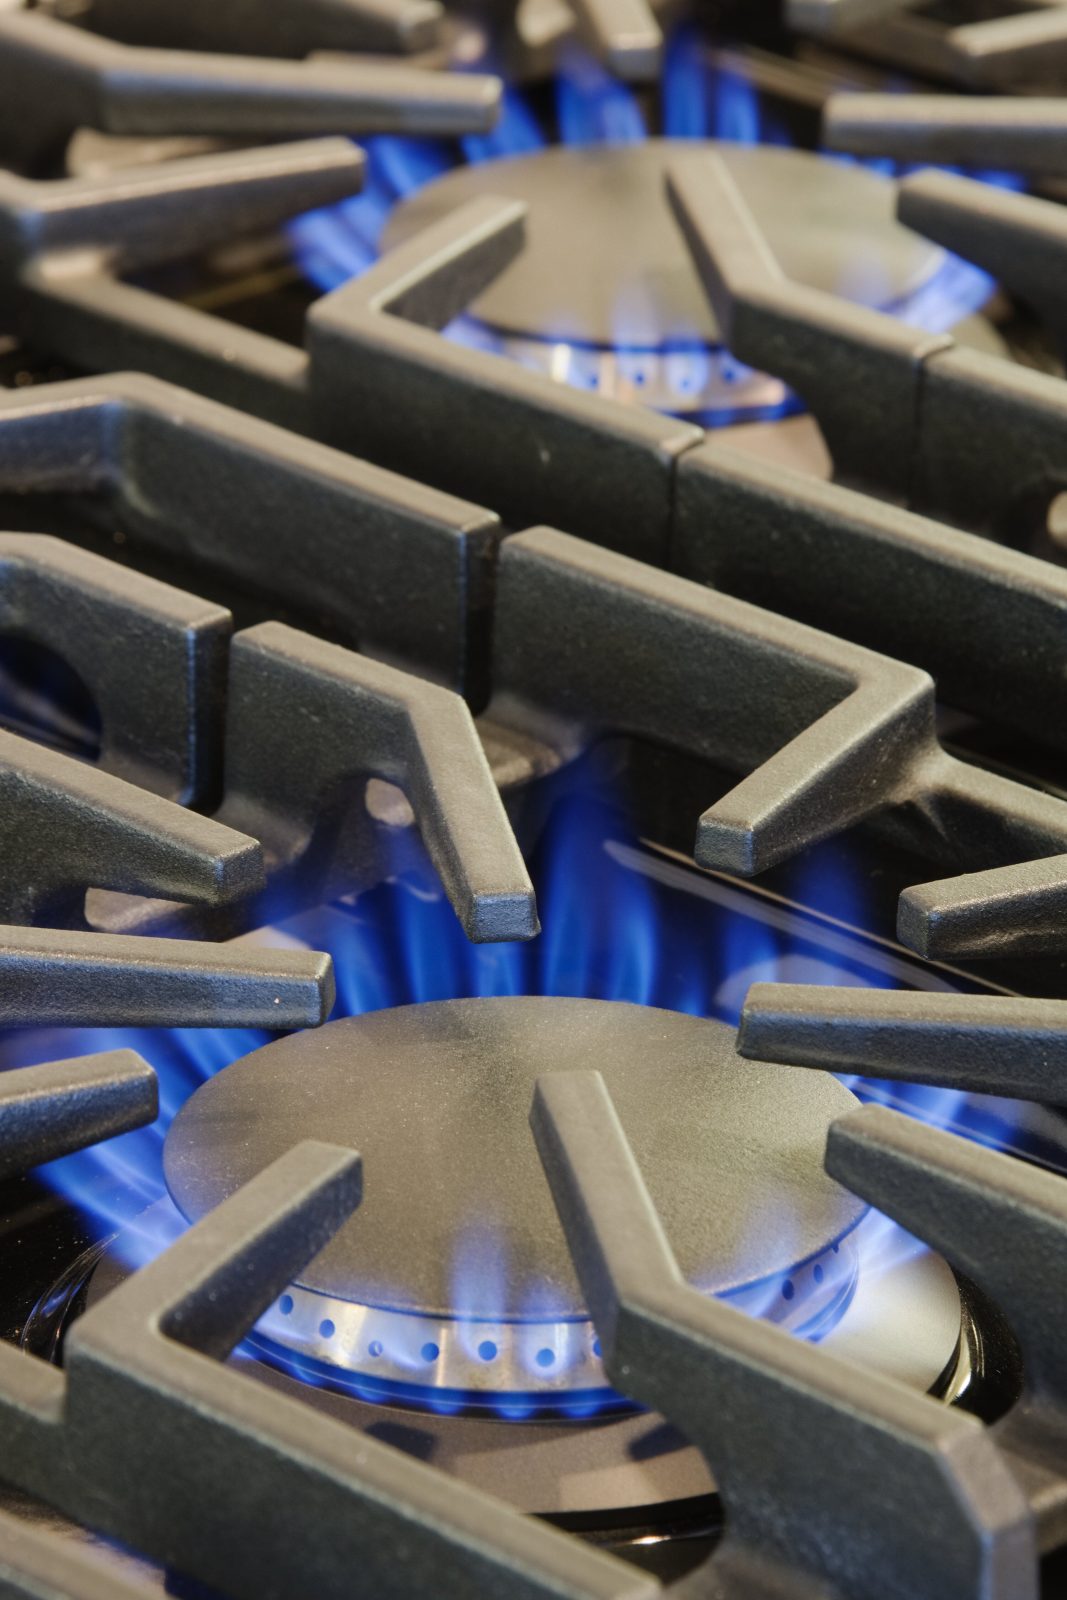 ignited-gas-burning-on-commercial-stove-2022-03-04-02-23-14-utc-2